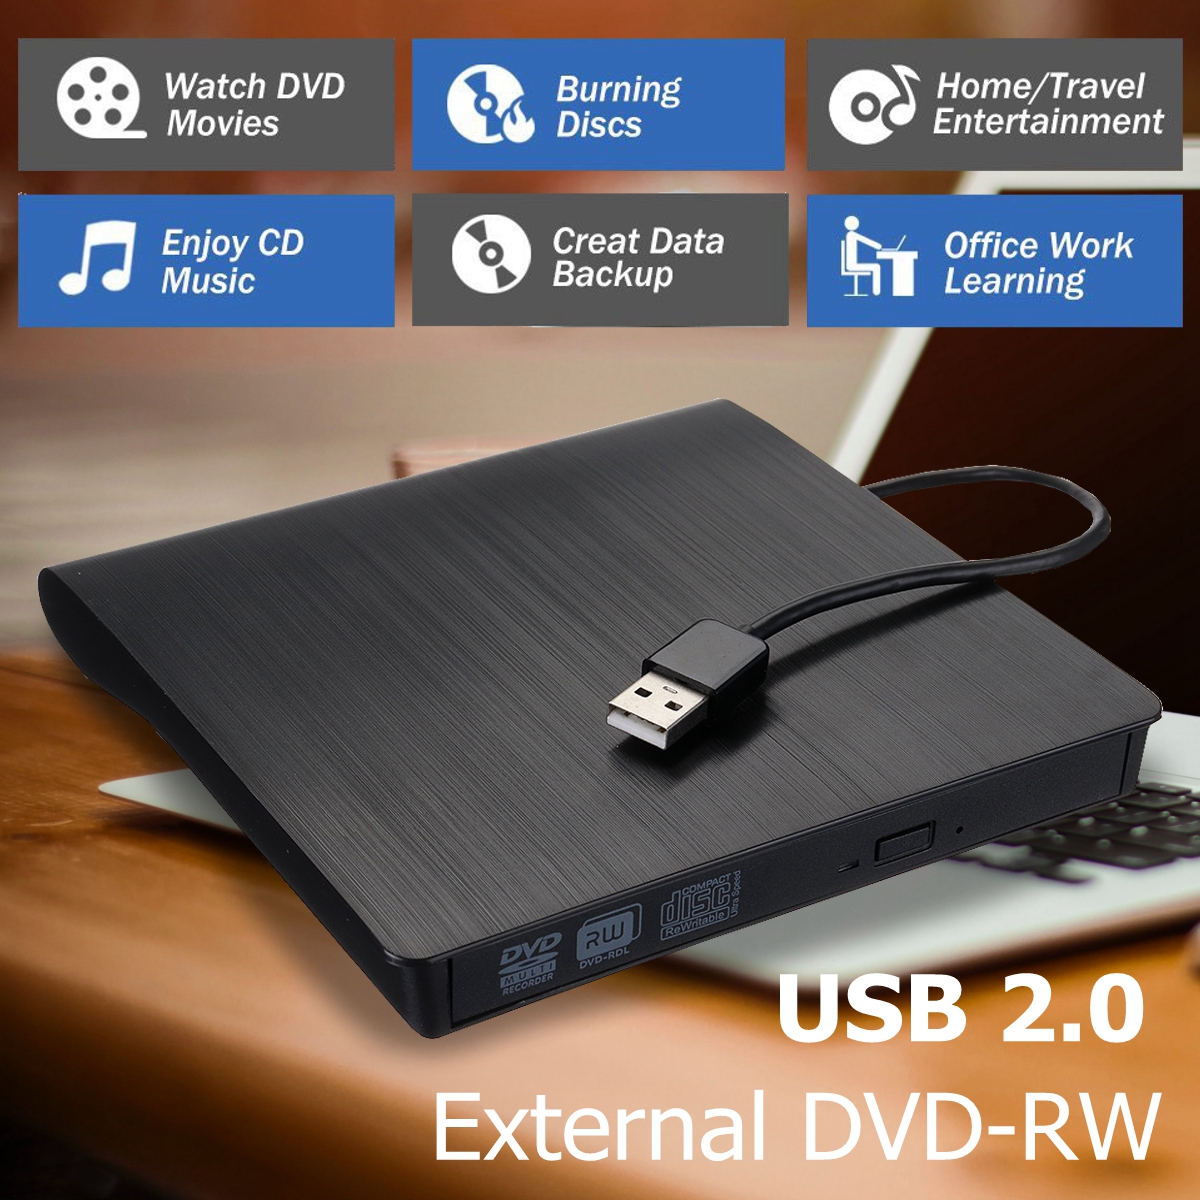 External-USB-20-DVD-RW-CD-Writer-Slim-Optical-Drive-Burner-Reader-Player-For-PC-Laptop-Business-Offi-1535879-7